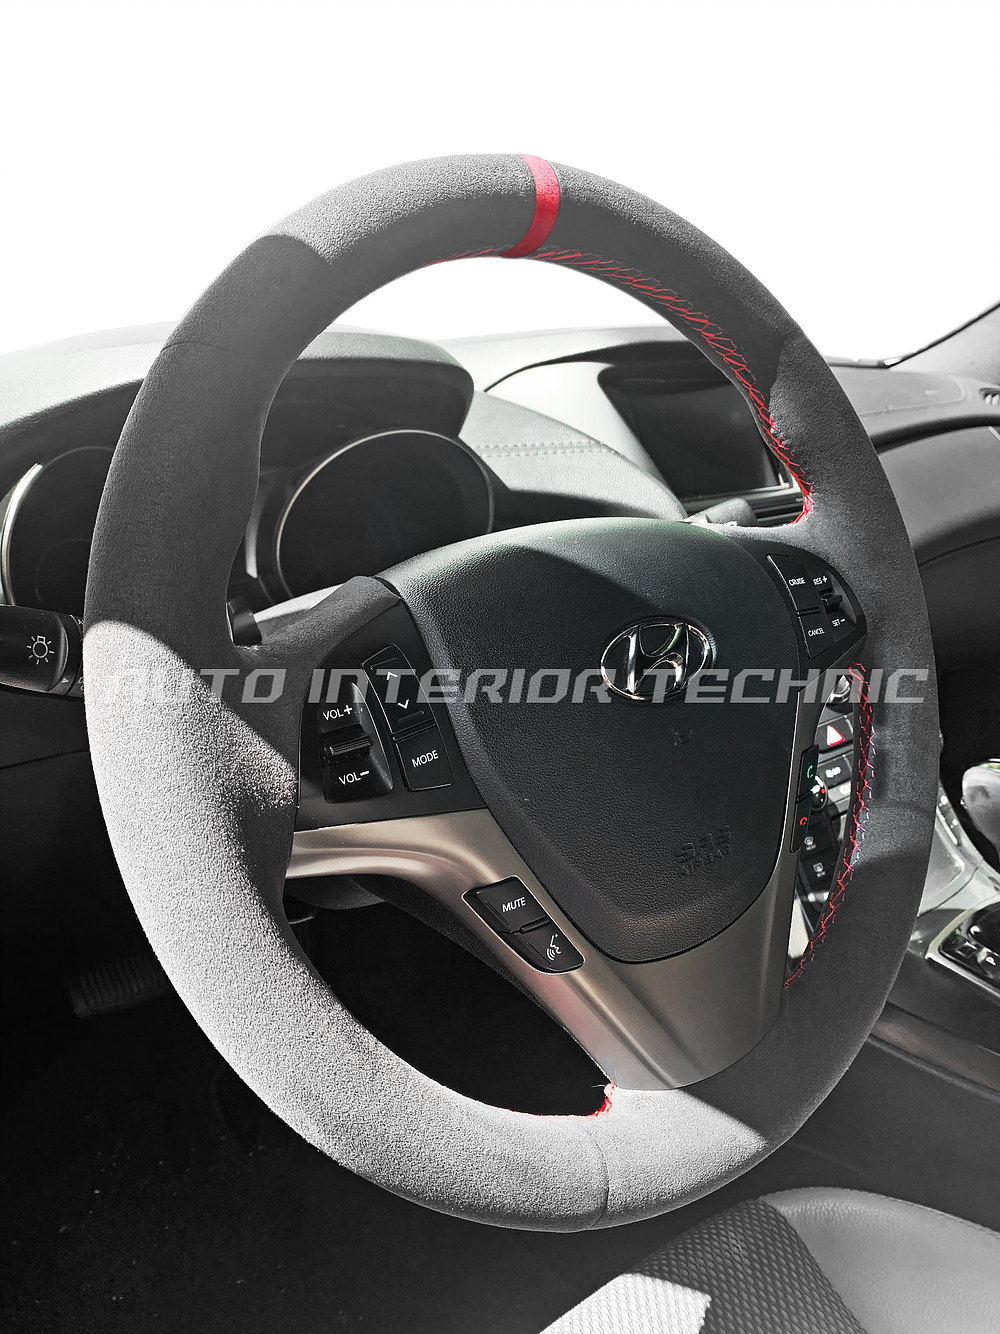 Envoltura para volante Auto Interior Technic (Genesis Coupe 09-13)